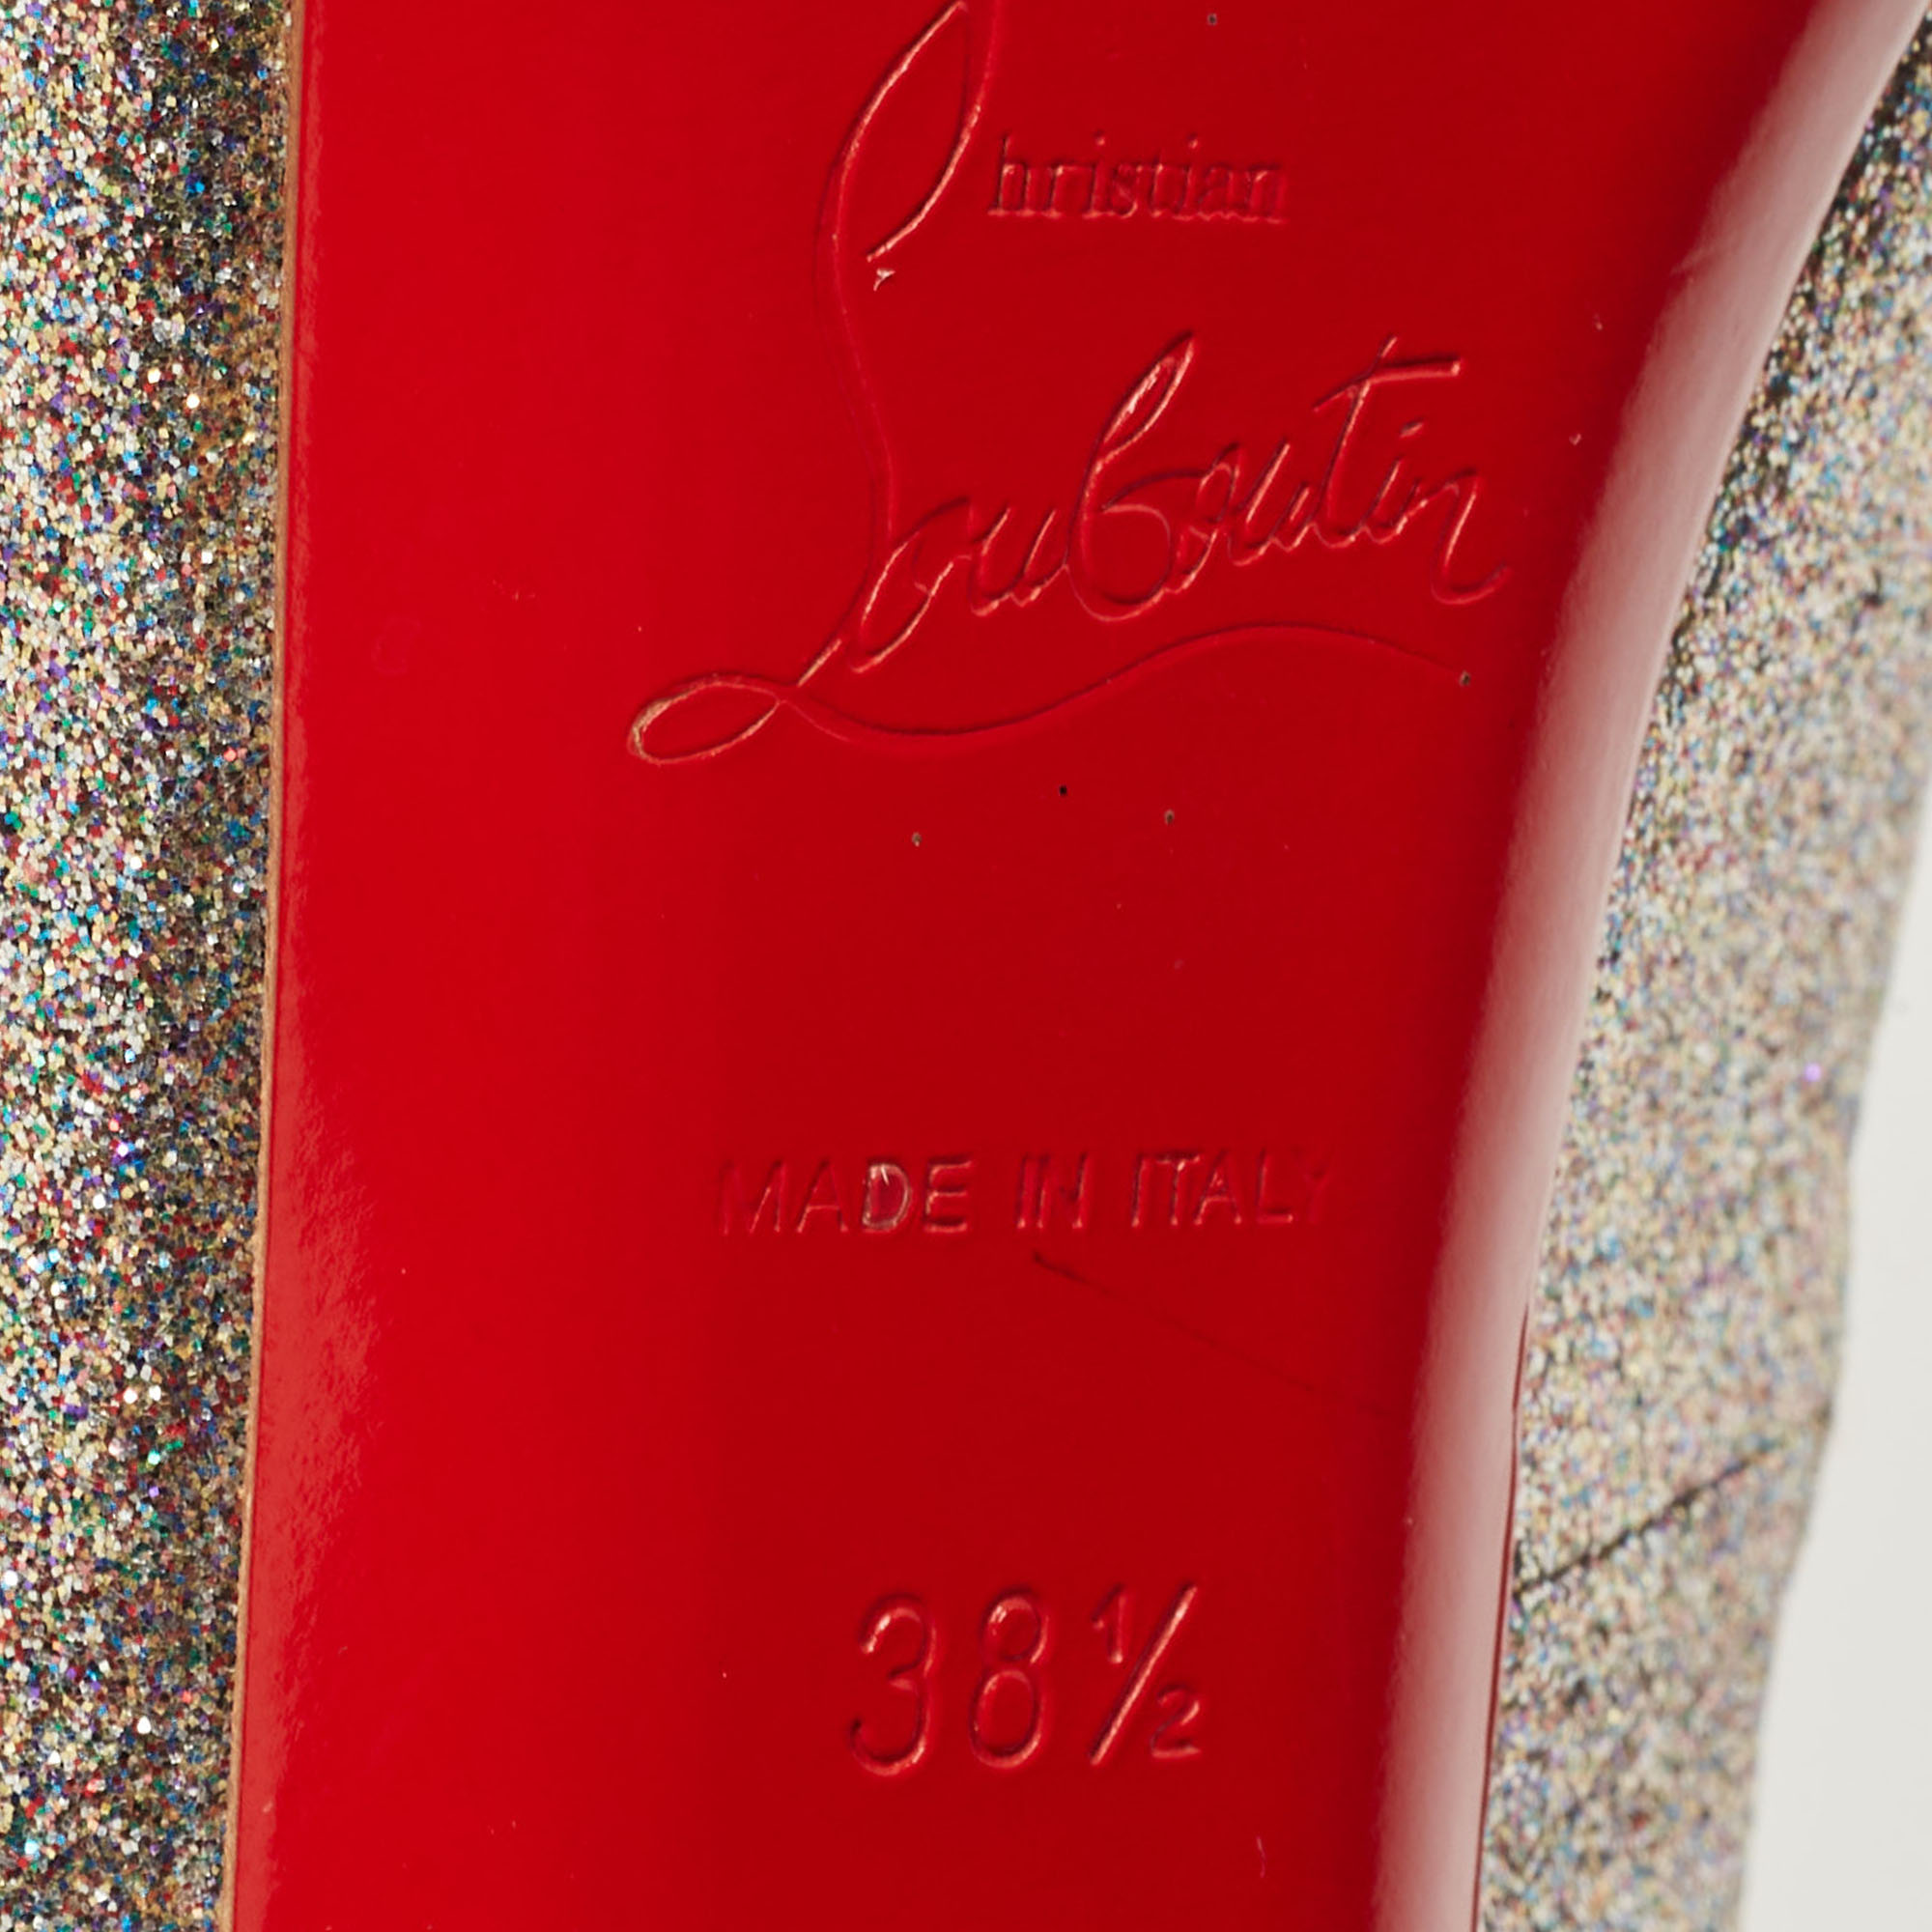 Christian Louboutin Silver/Pink Glitter No Prive Peep Toe Slingback Sandals Size 38.5